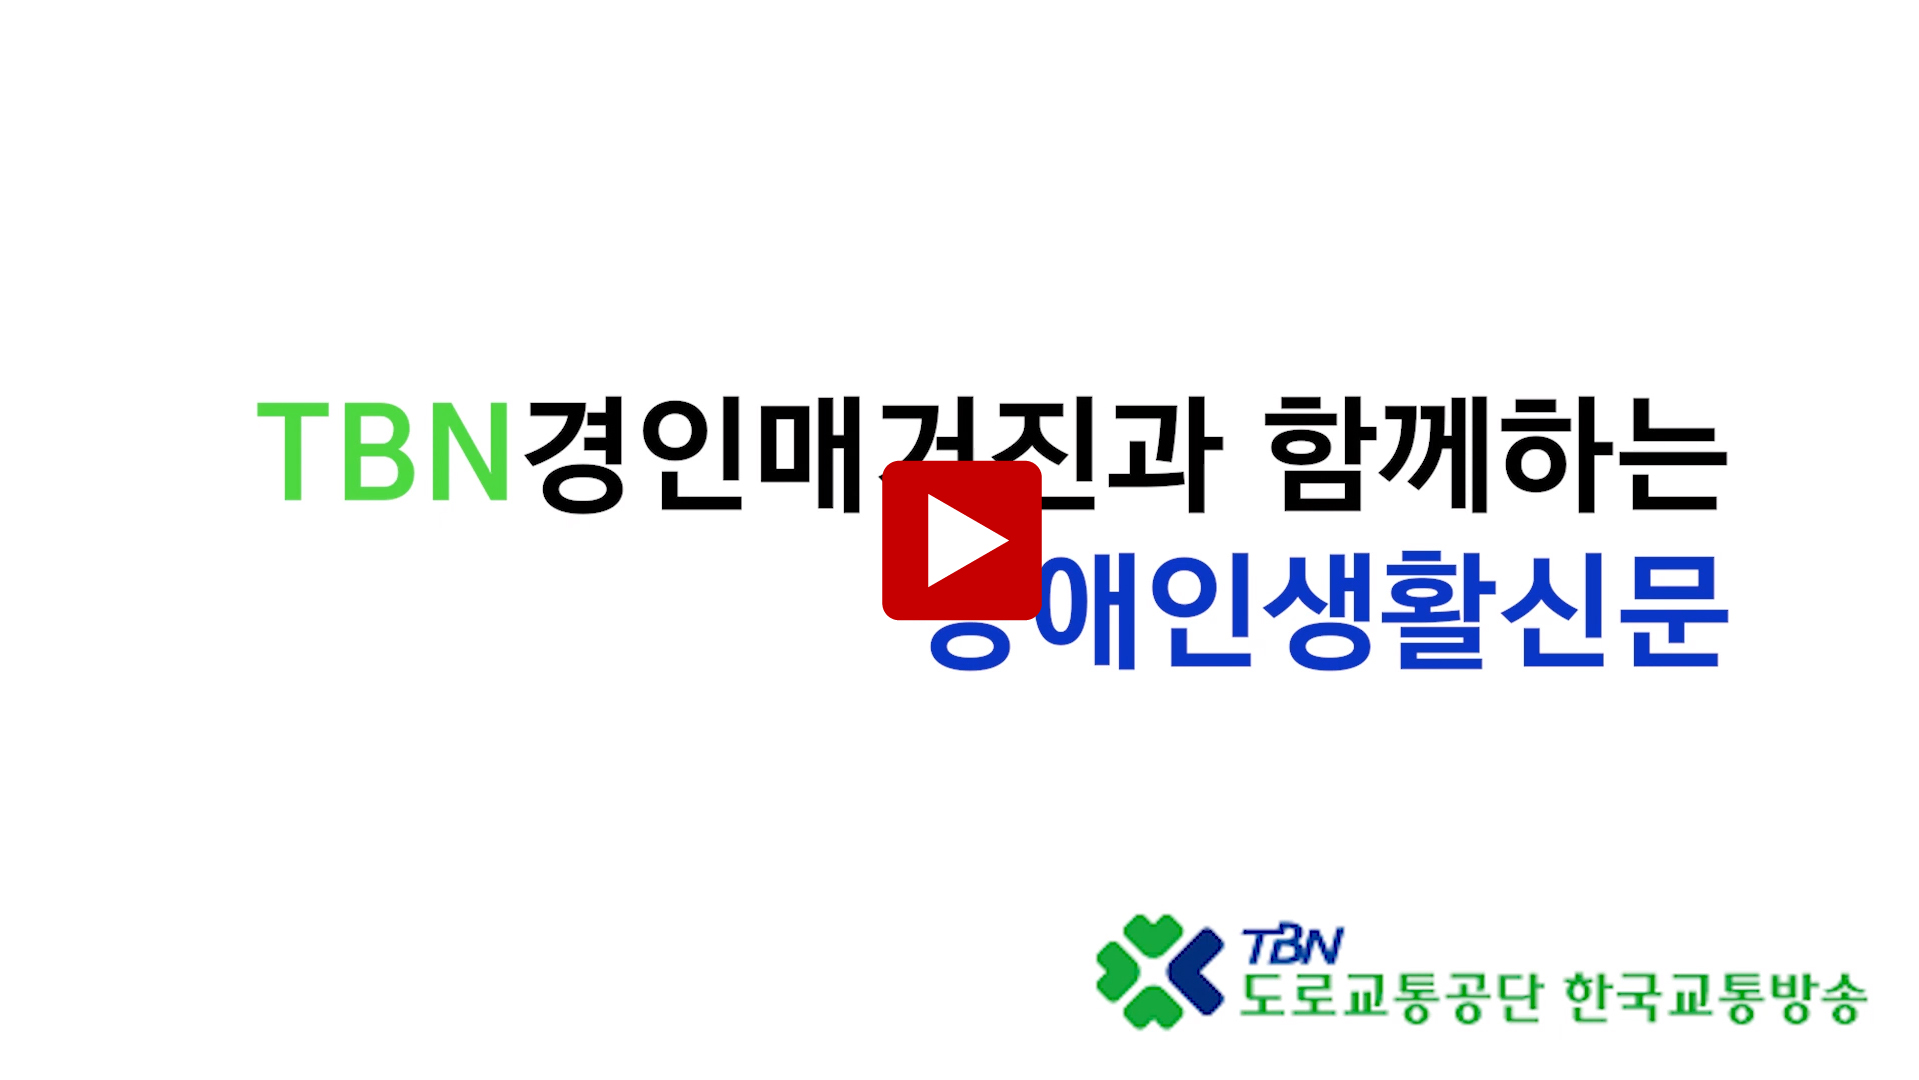 TBN경인매거진과 함께하는 장애인생활신문 -2022년 4월 13일 방송